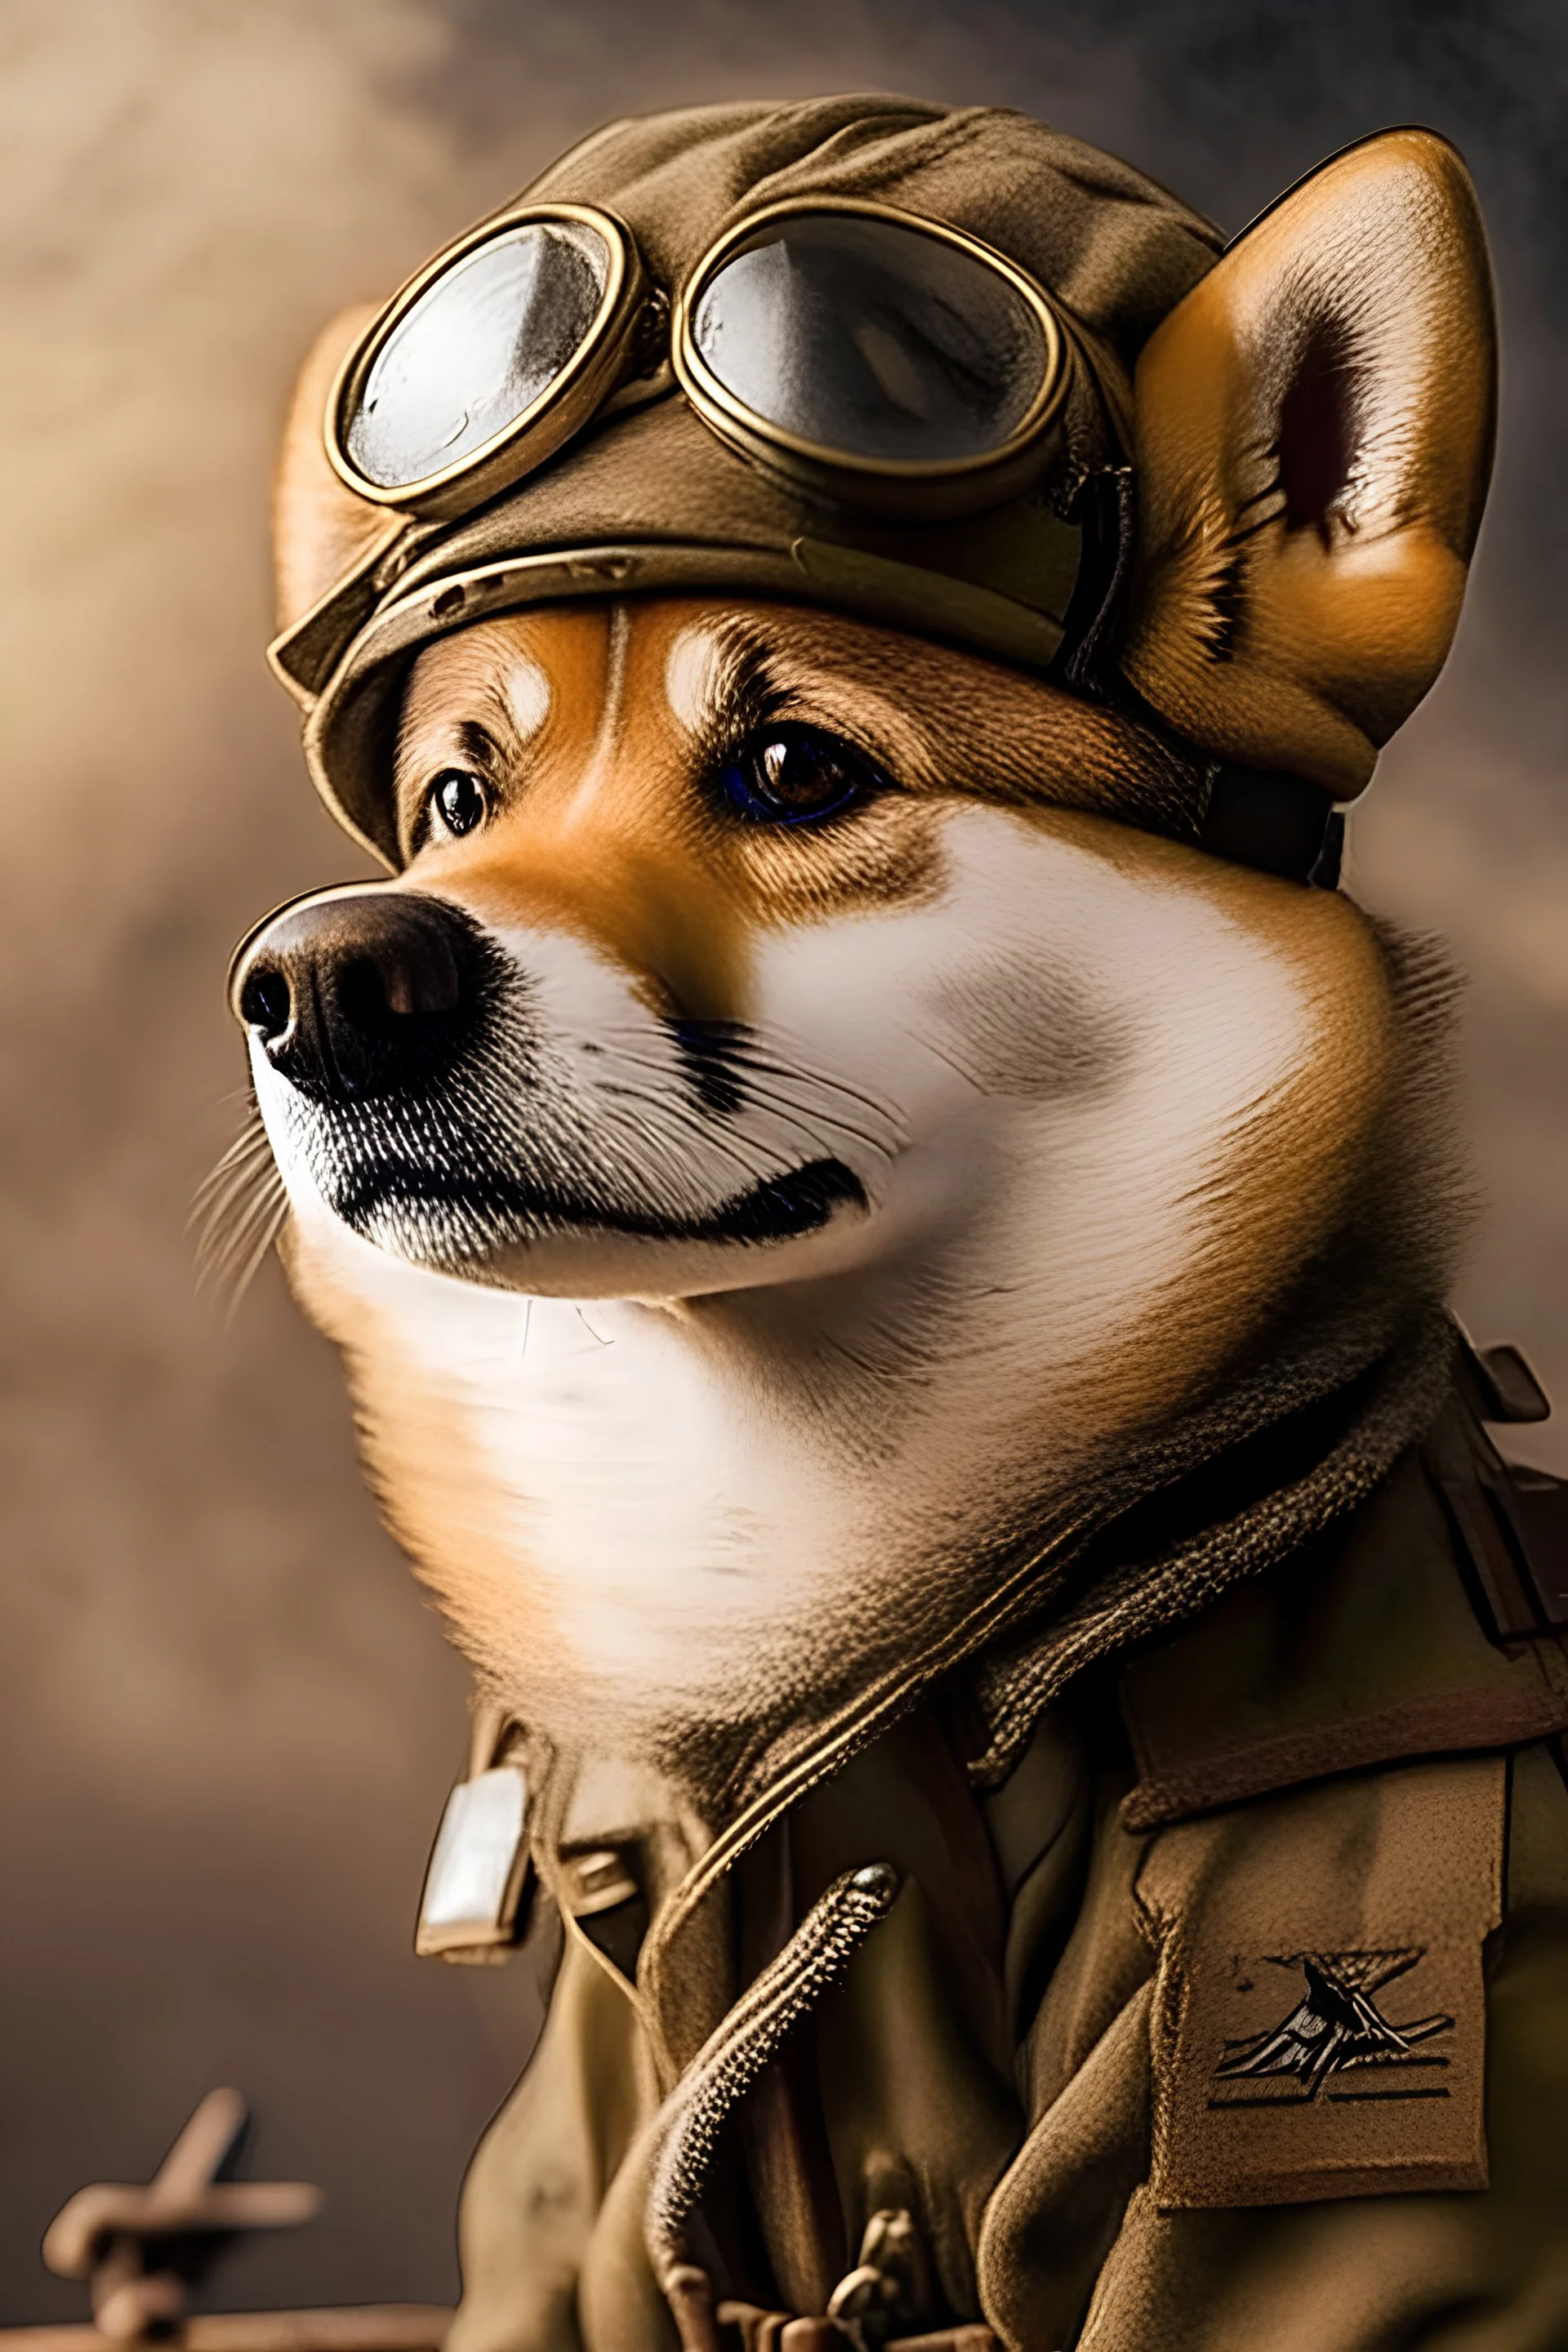 doge ww2 pilot, wearing goggles